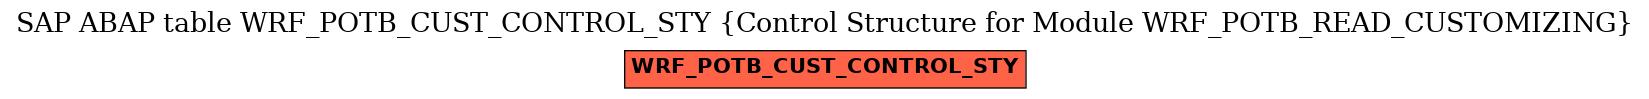 E-R Diagram for table WRF_POTB_CUST_CONTROL_STY (Control Structure for Module WRF_POTB_READ_CUSTOMIZING)